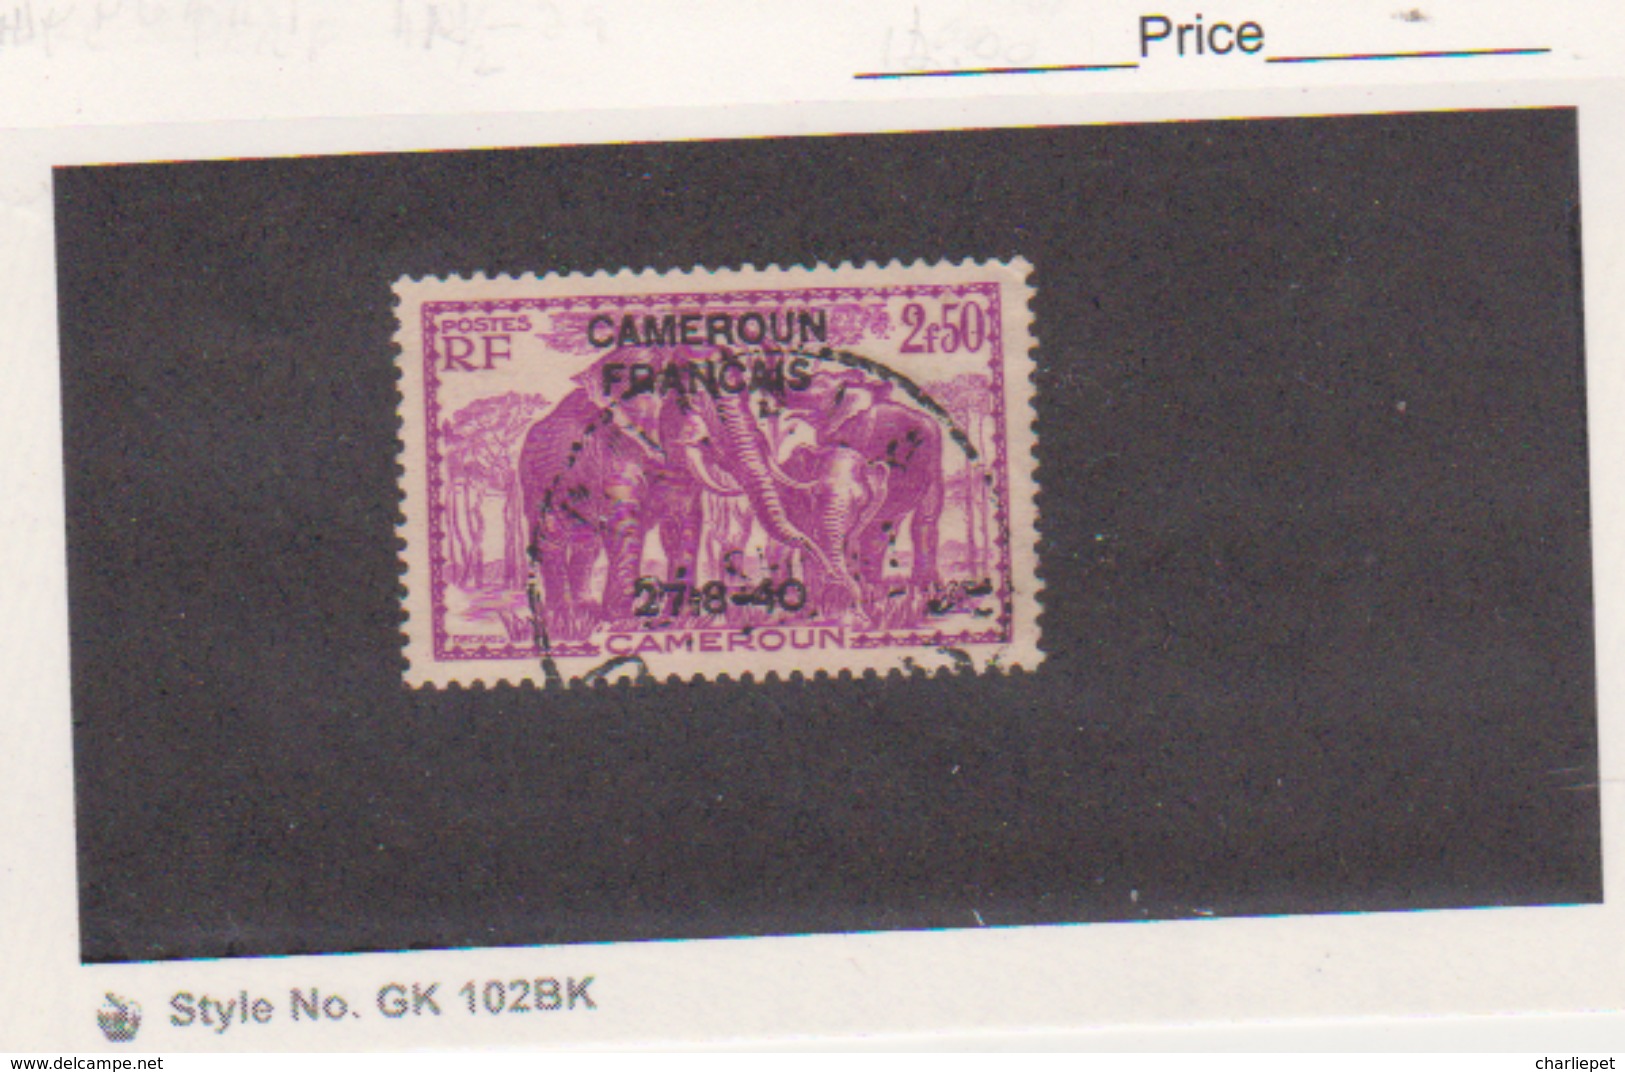 CAMEROUN - Scott # 275 - ELEPHANTS / CAMEROUN  FRANCAIS  Used - Used Stamps